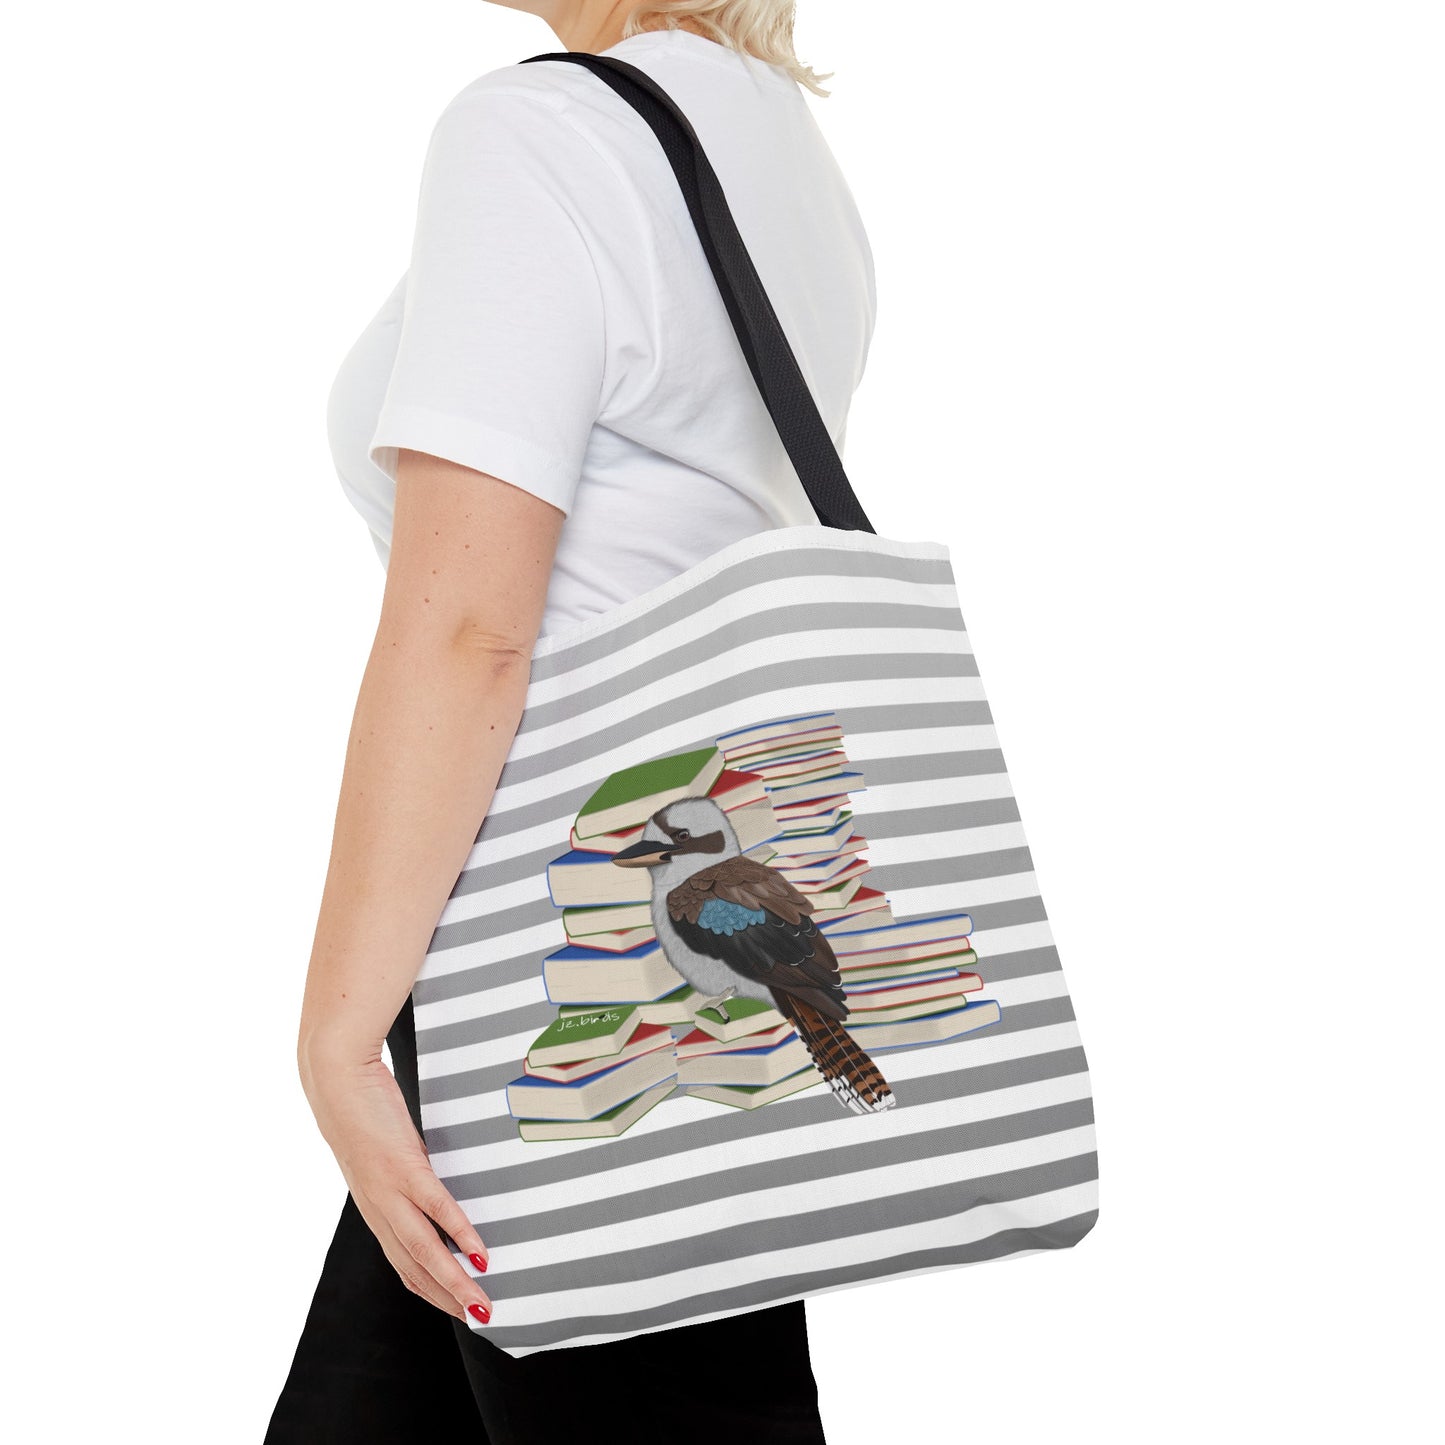 Kookaburra Bird and Books Birdlover Bookworm Tote Bag 16"x16"